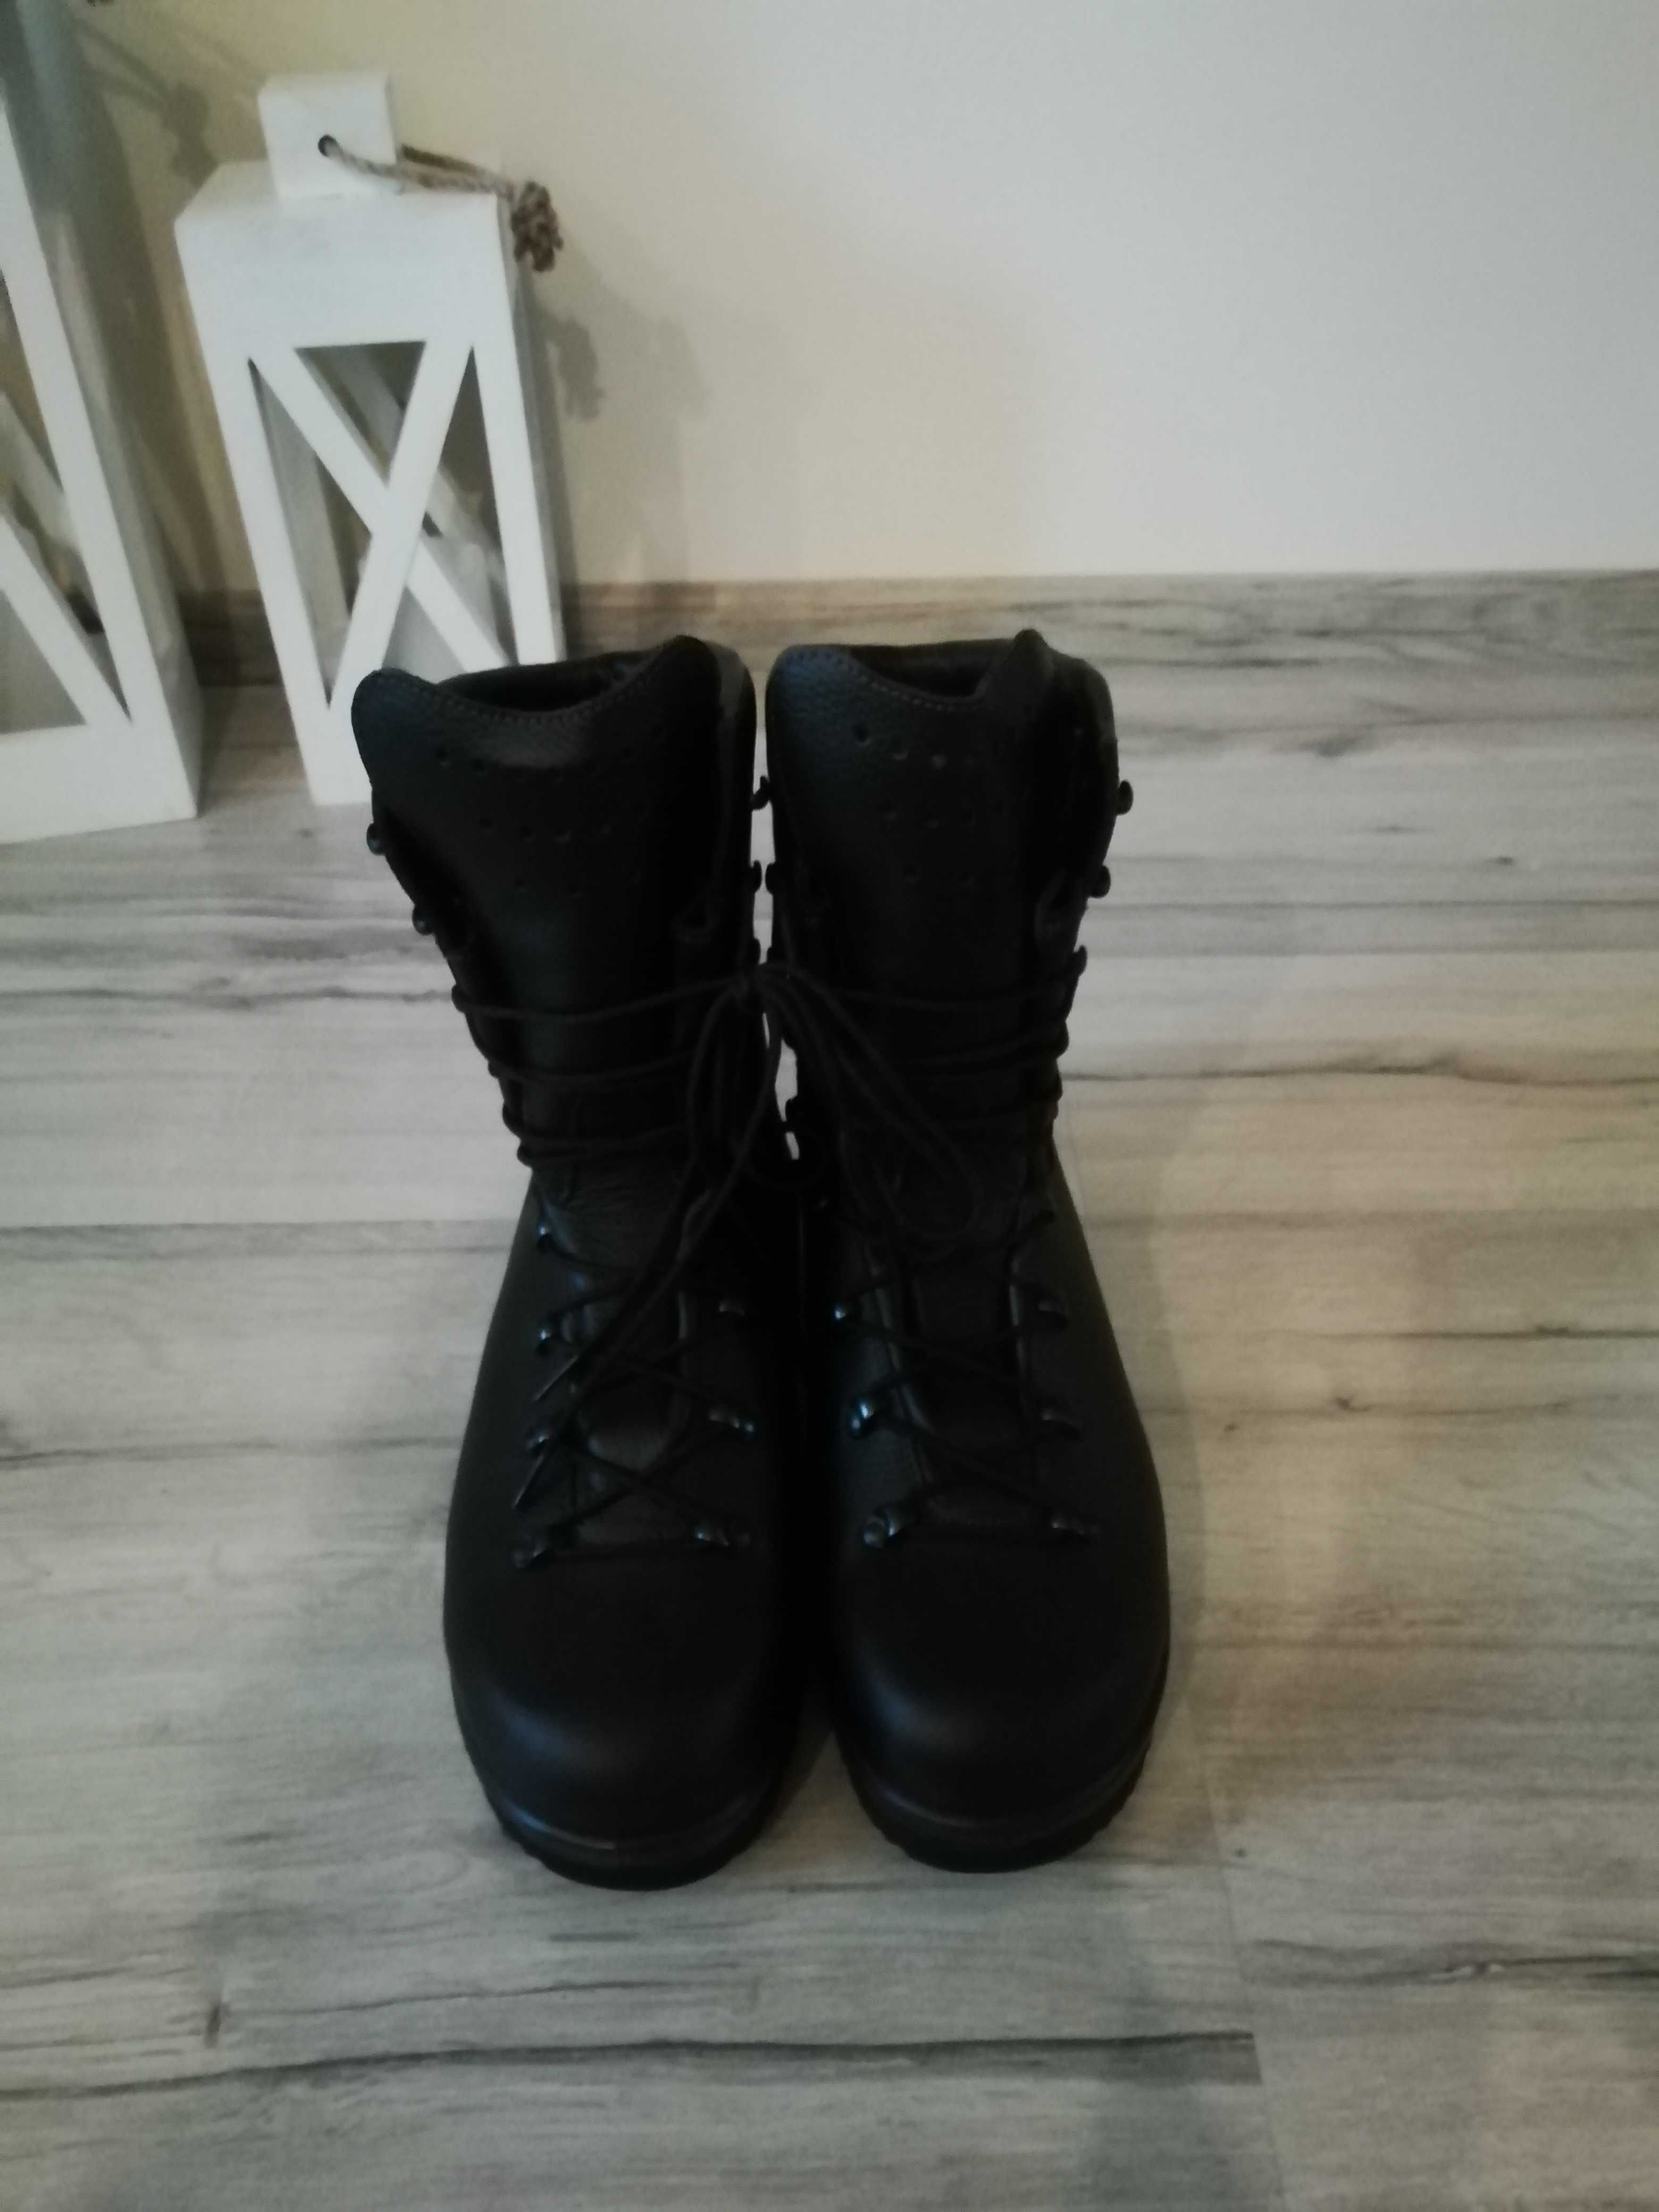 zimowe, wojskowe buty wzór 933